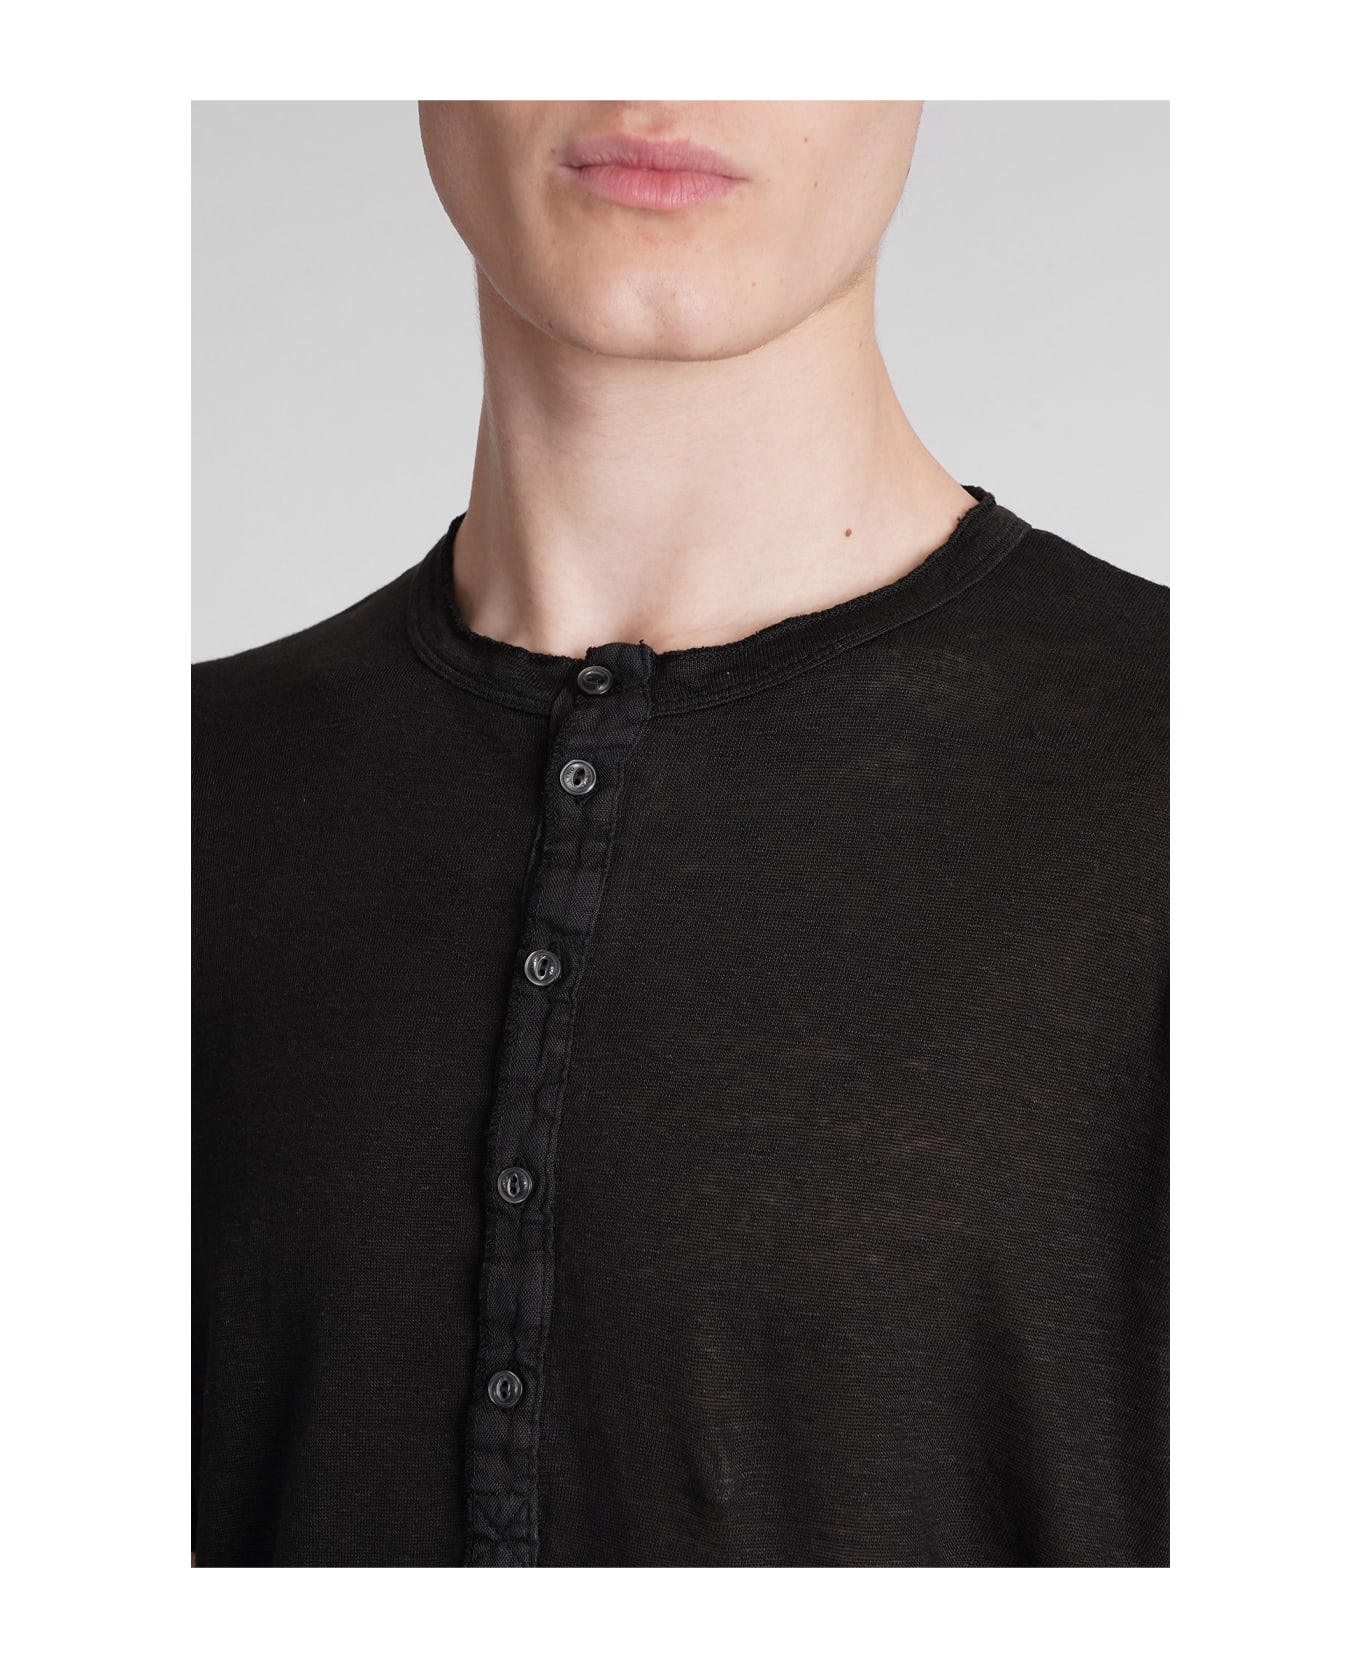 120% Lino T-shirt In Black Linen - black シャツ